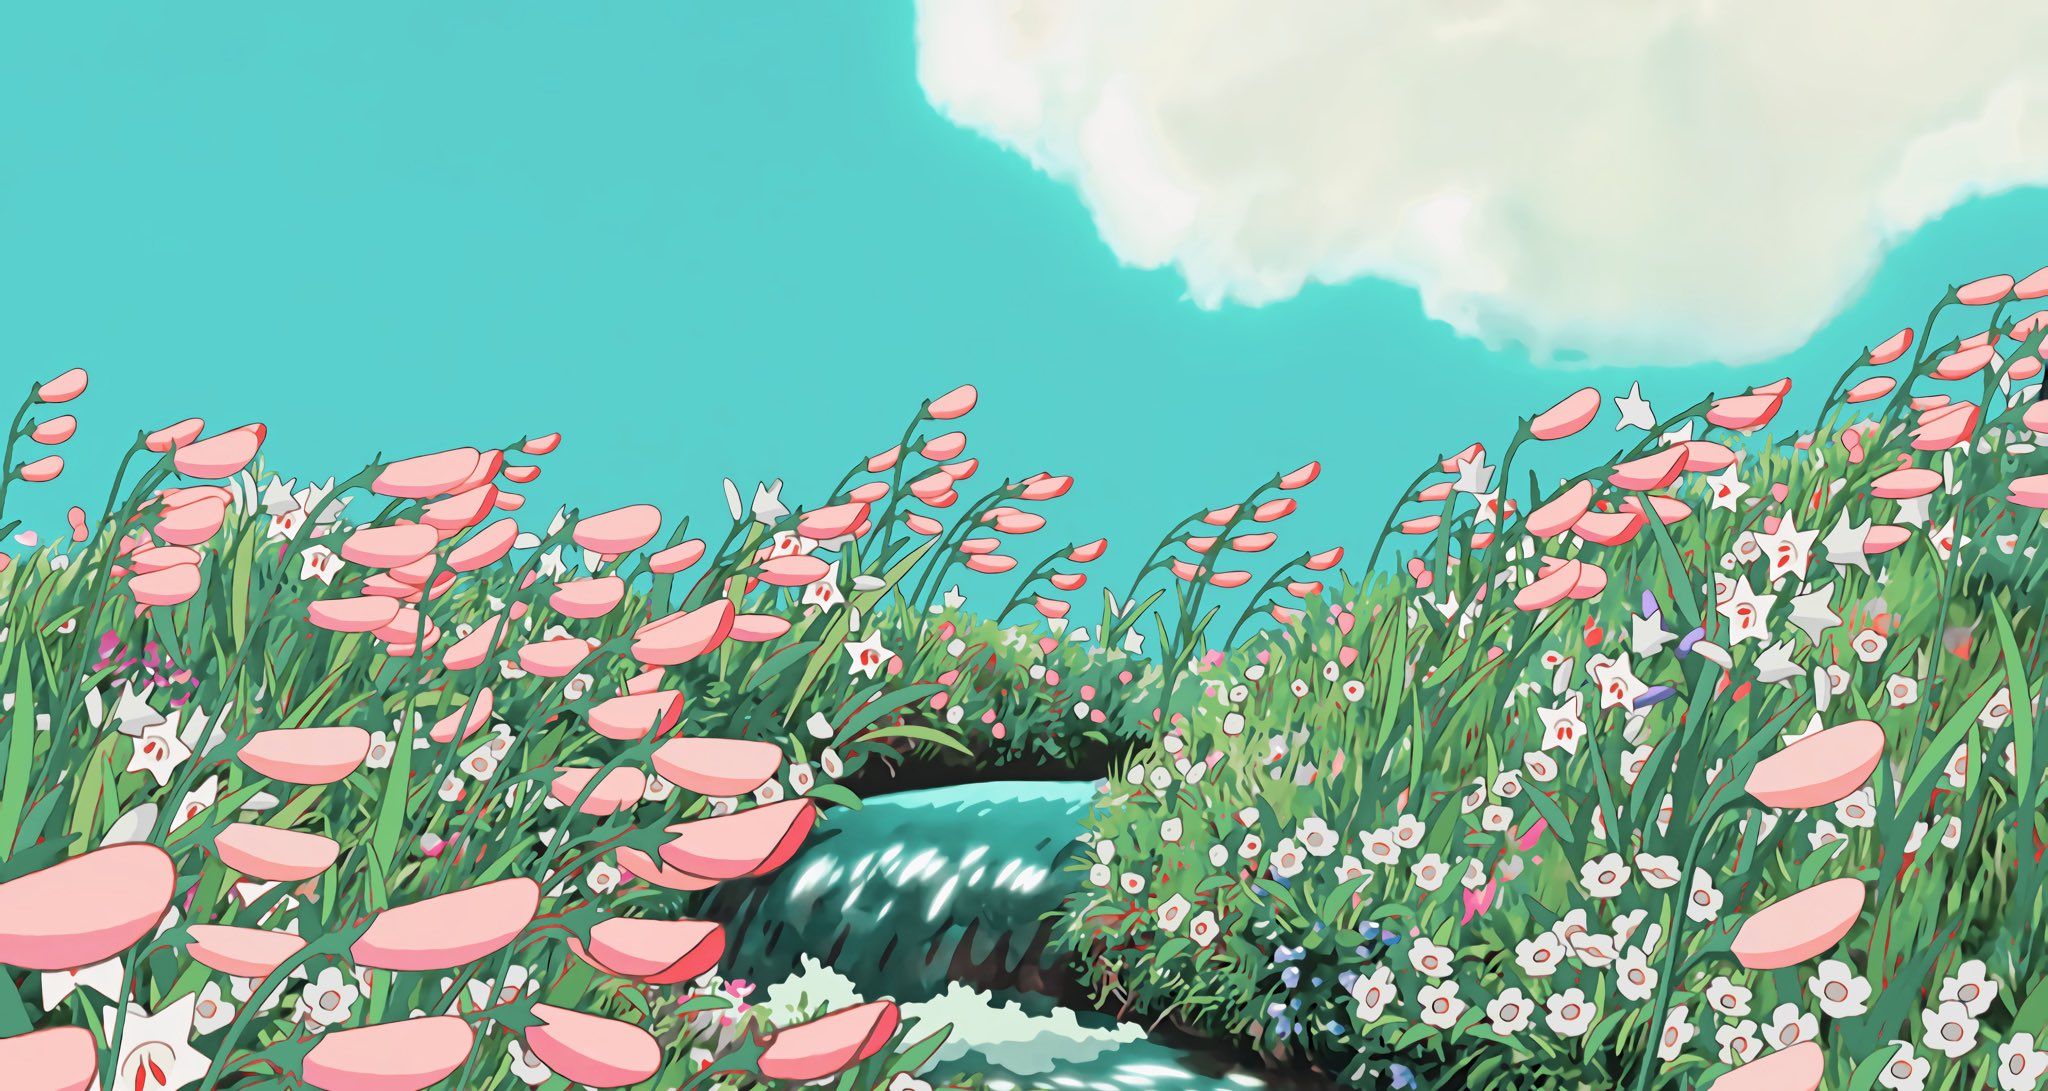 Ghibli Wallpaper